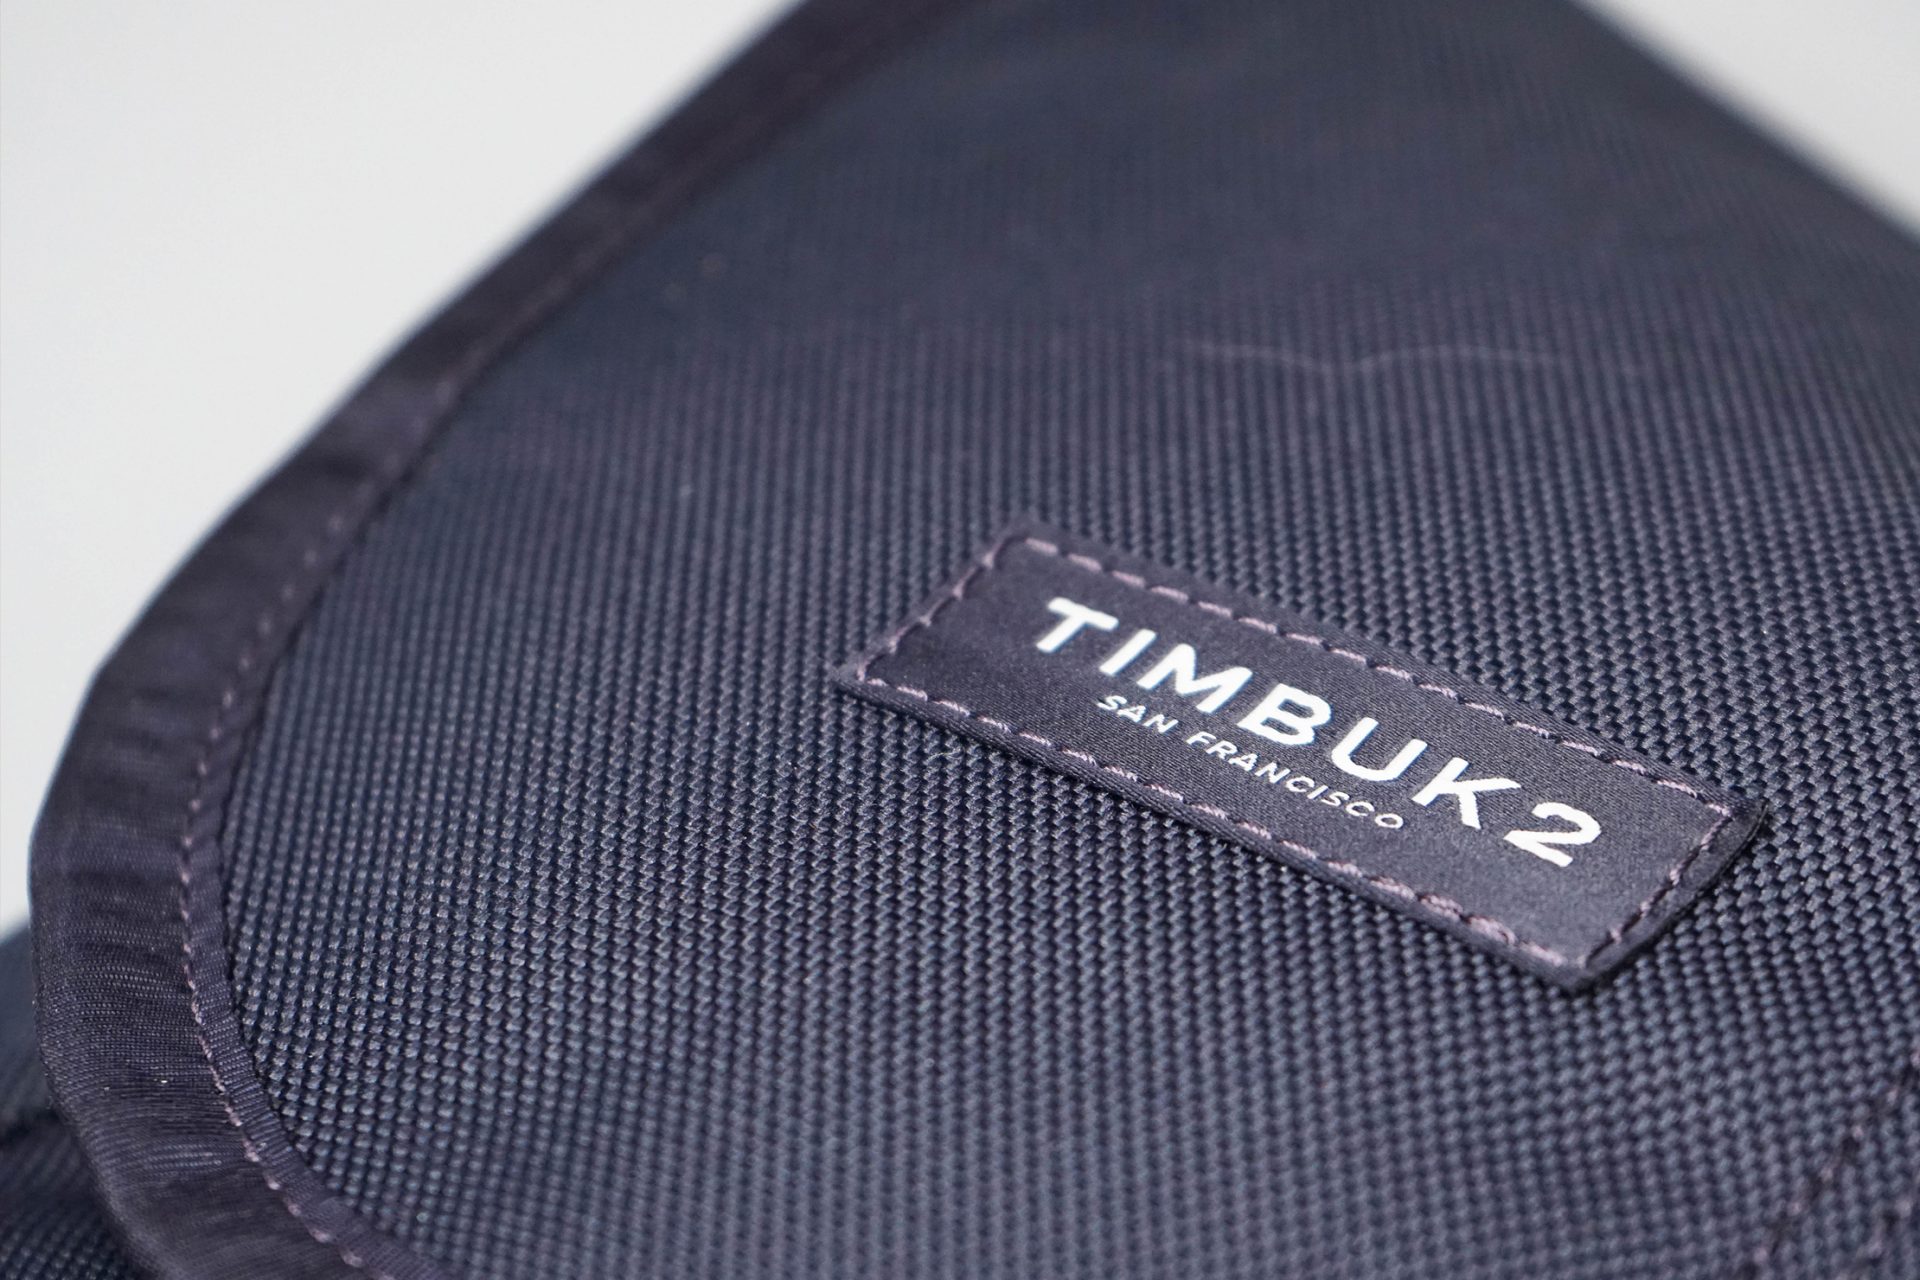 Timbuk2 Classic Messenger Bag Material and Logo